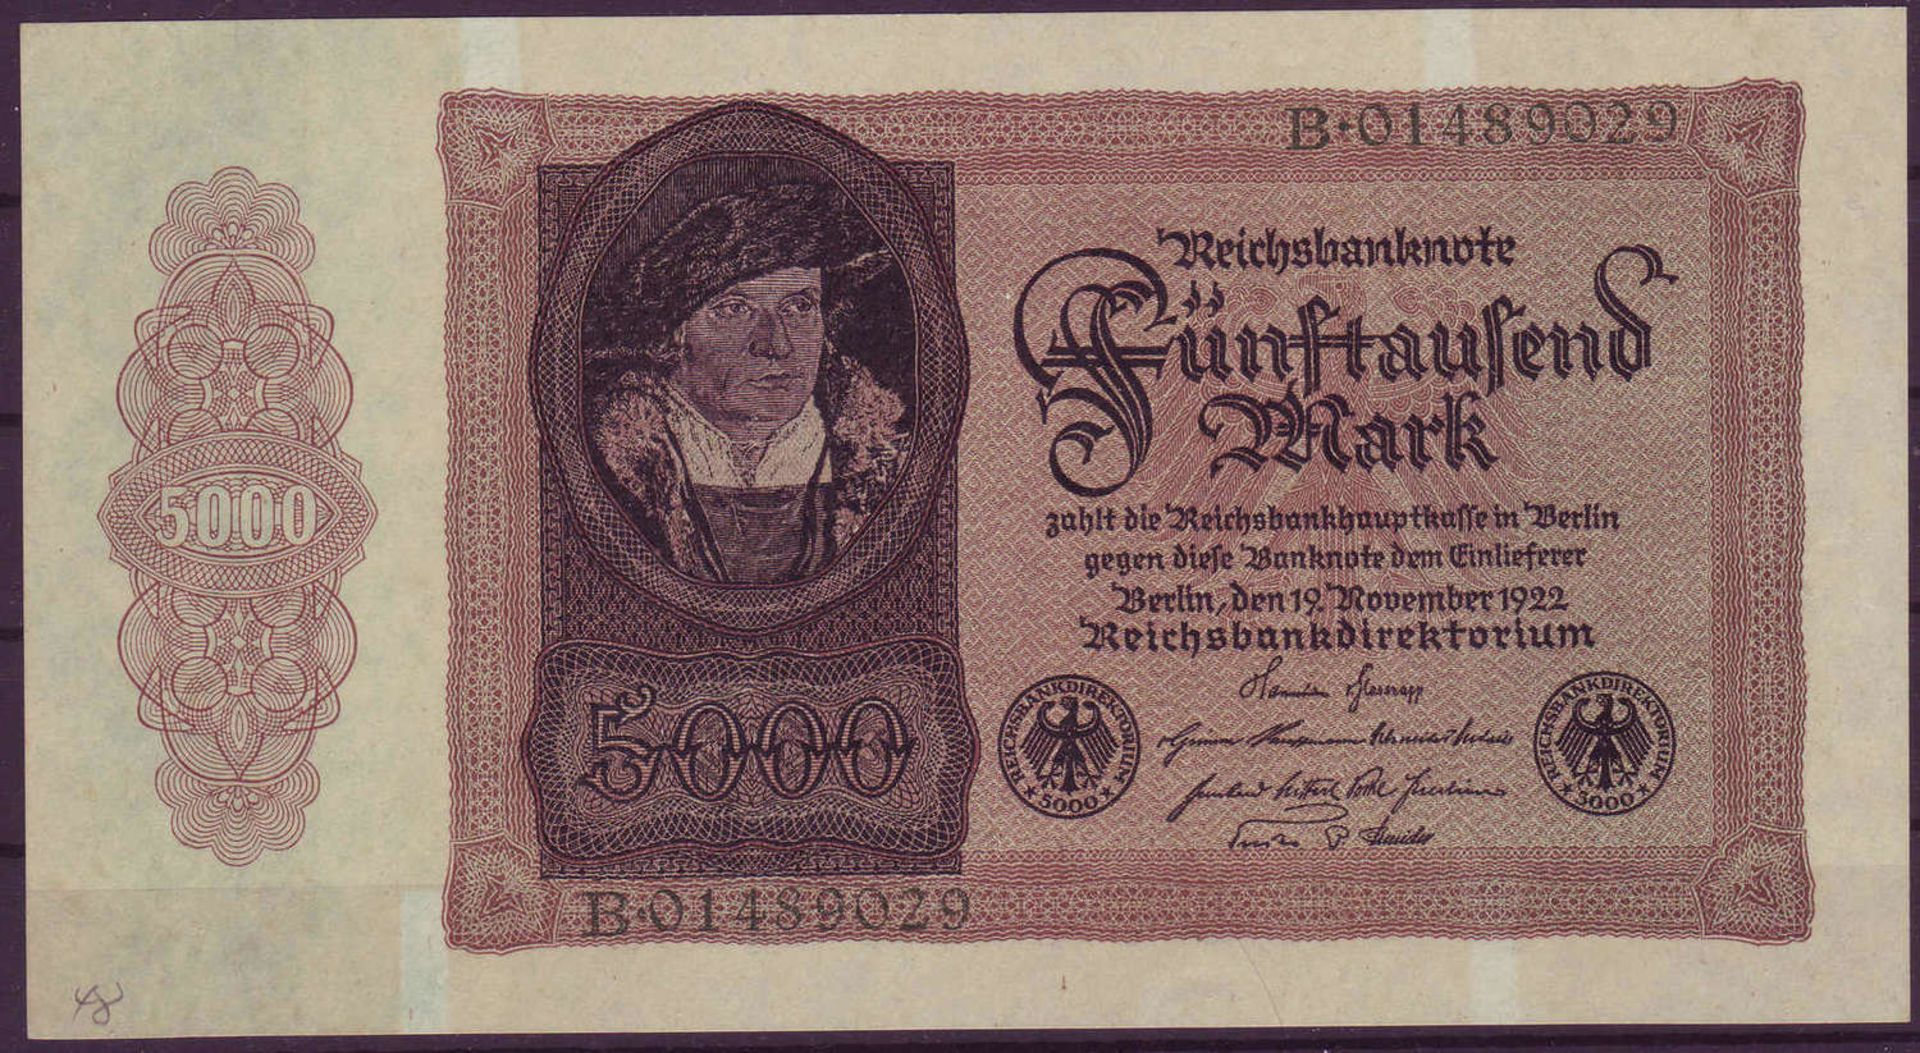 Weimarer Republik, 5000 Mark - Banknote 19.11.1922. Rosenberg 77. Zustand I.Weimar Republic, 5000